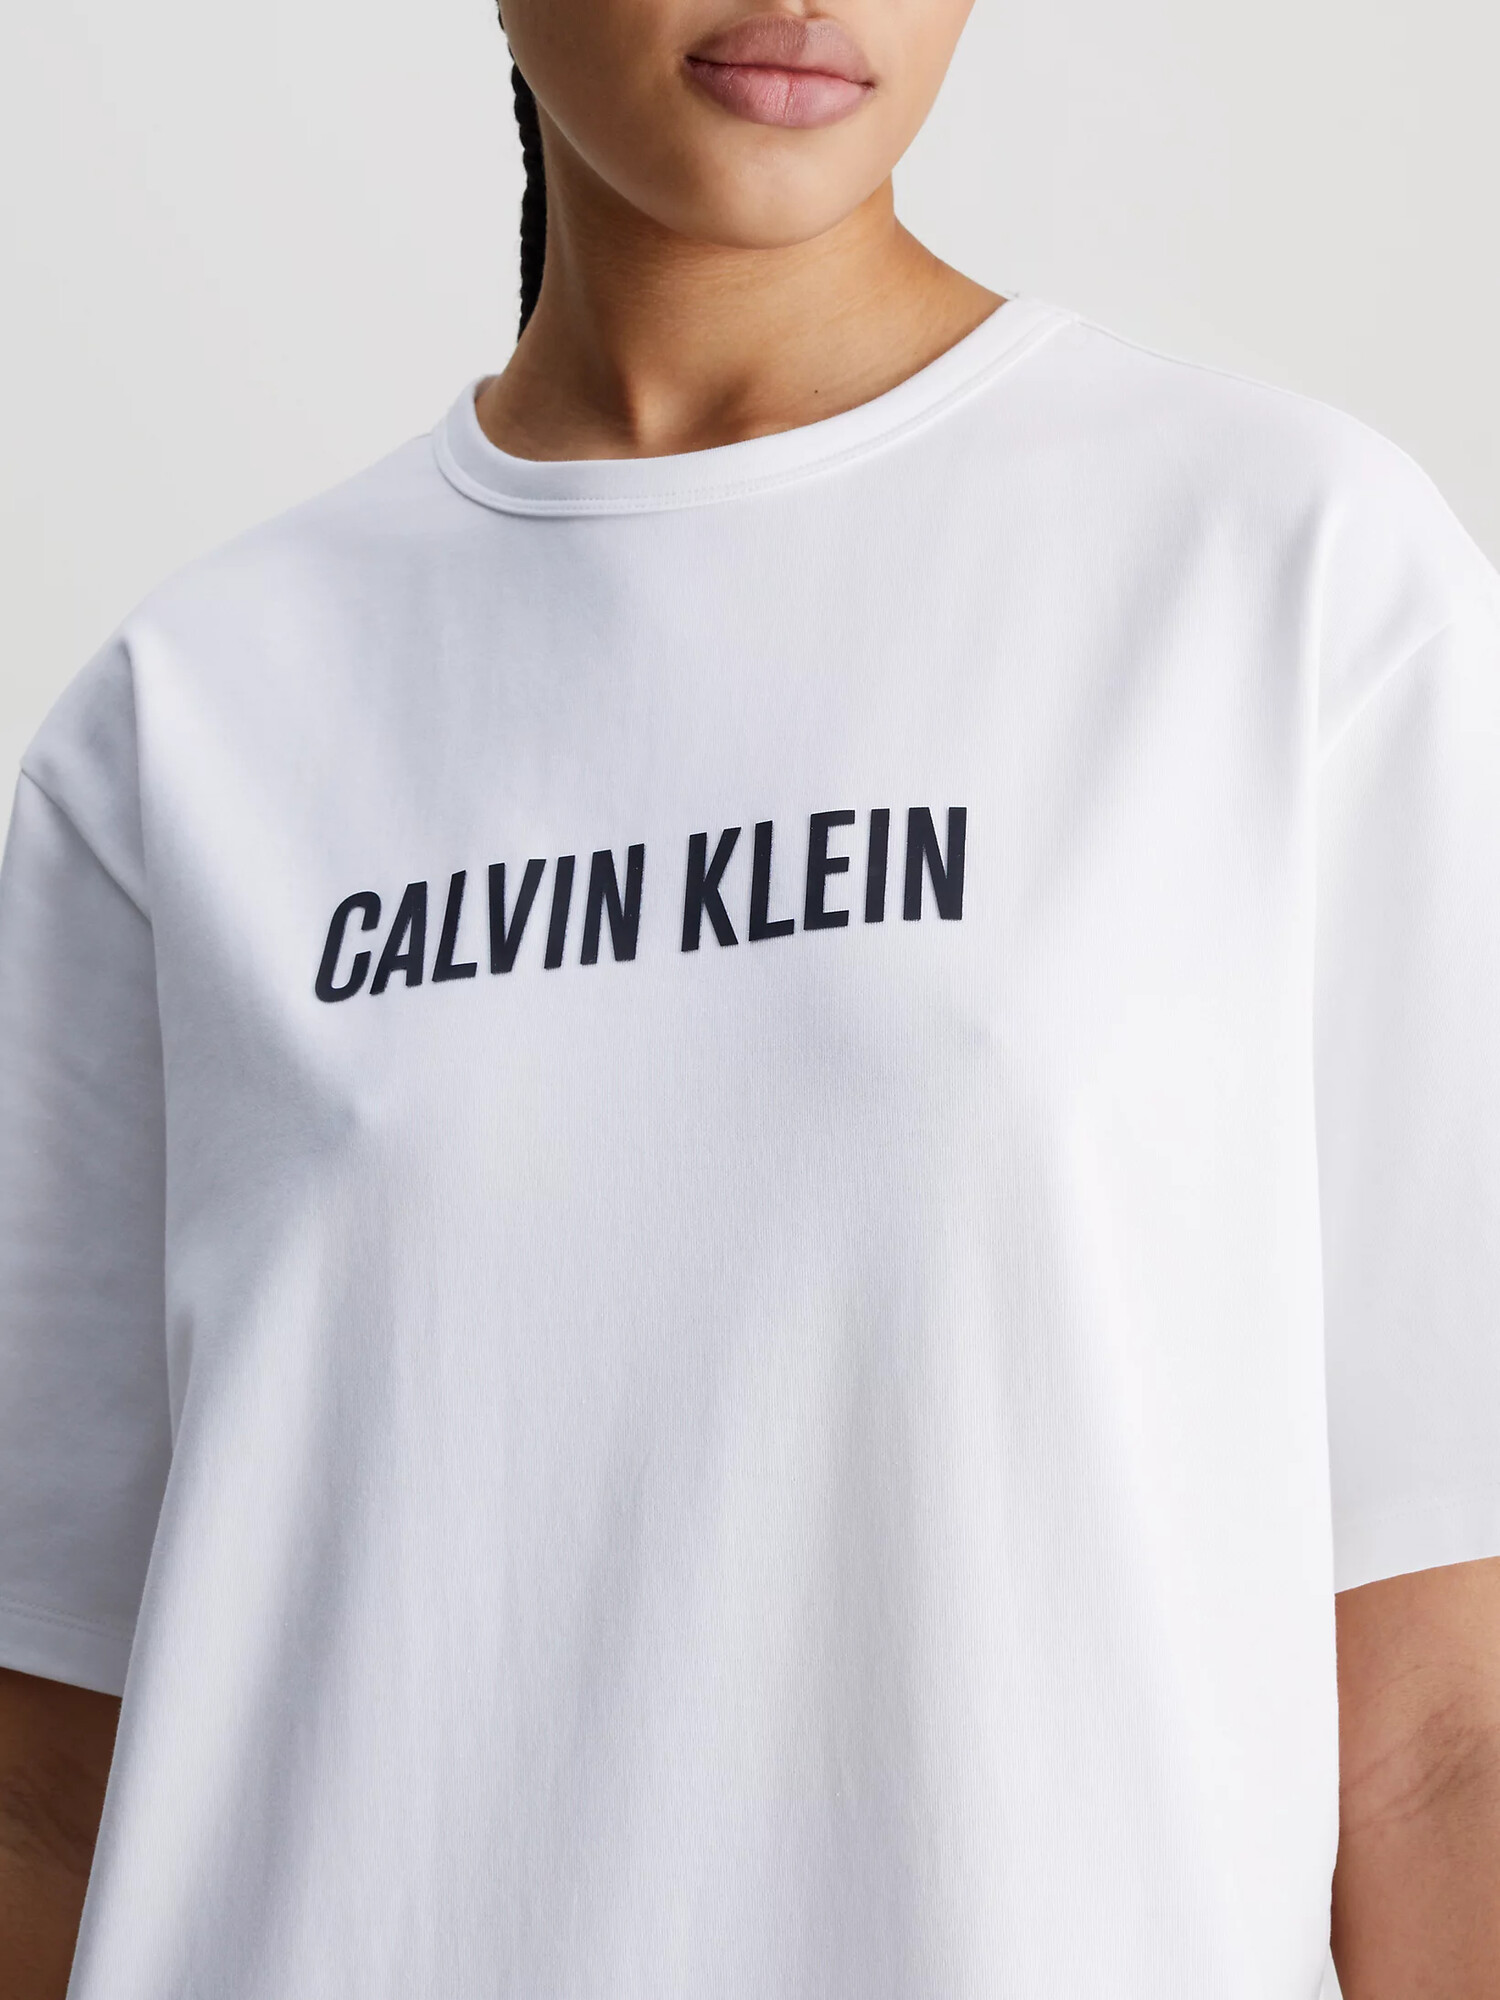 Dámská noční košile QS7126E 100 bílá - Calvin Klein XL